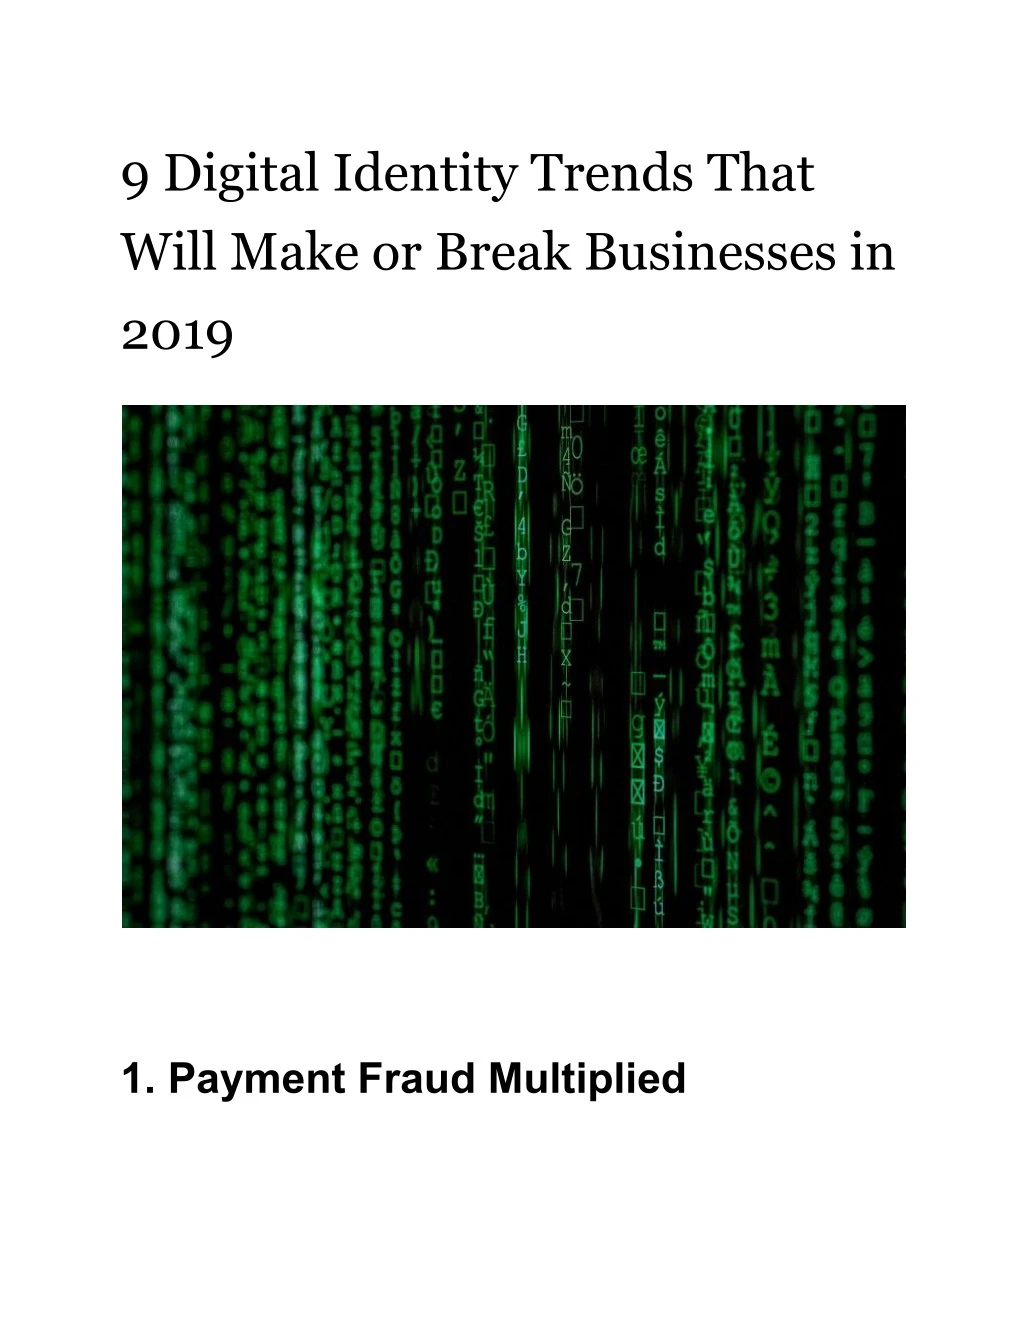 9 digital identity trends that will make or break